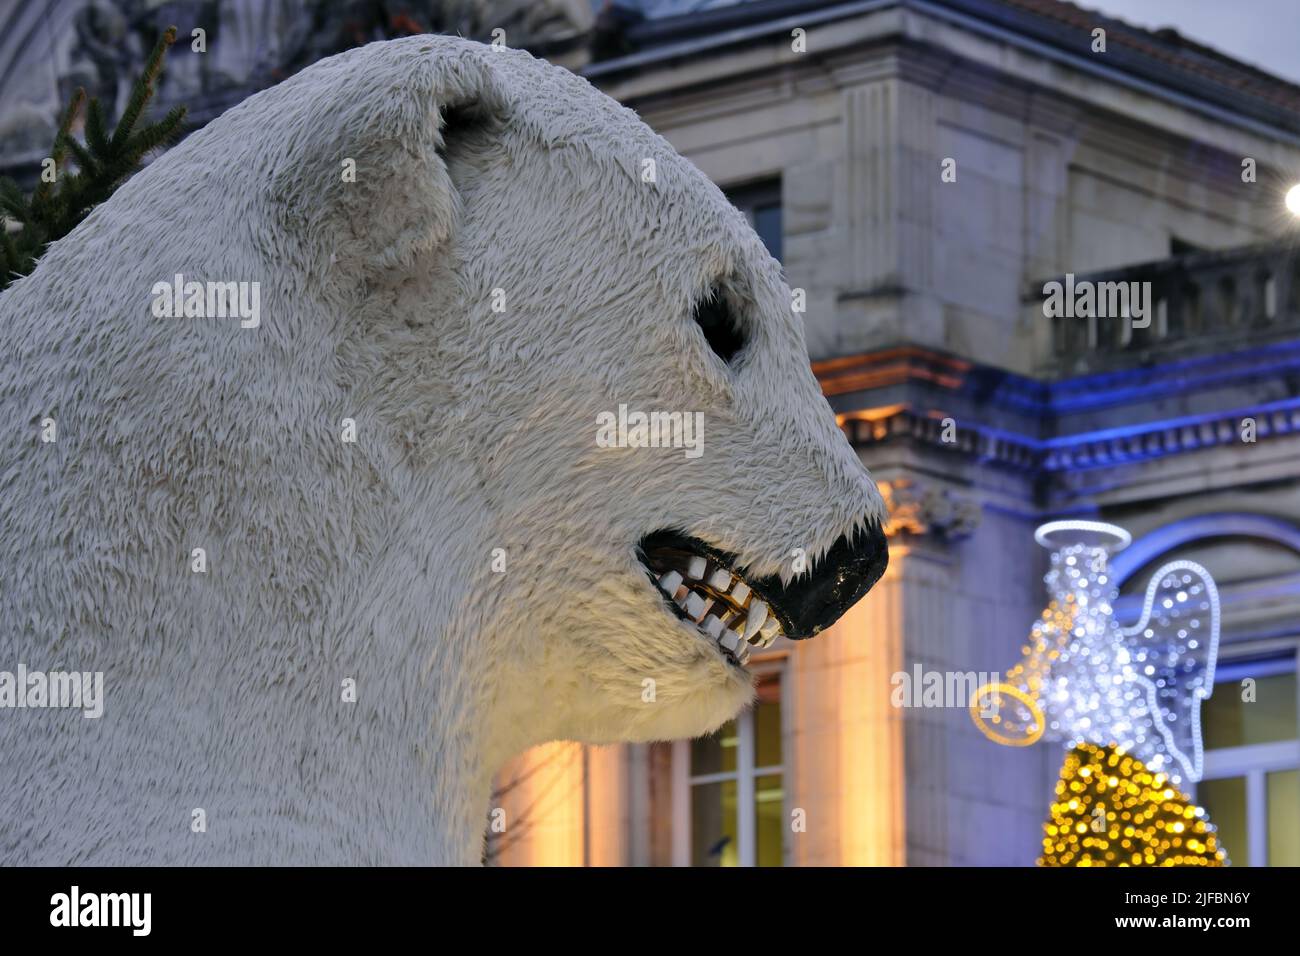 France, Doubs, Montbeliard, Place Saint Martin, polar bear, Christmas decorations and illuminations Stock Photo